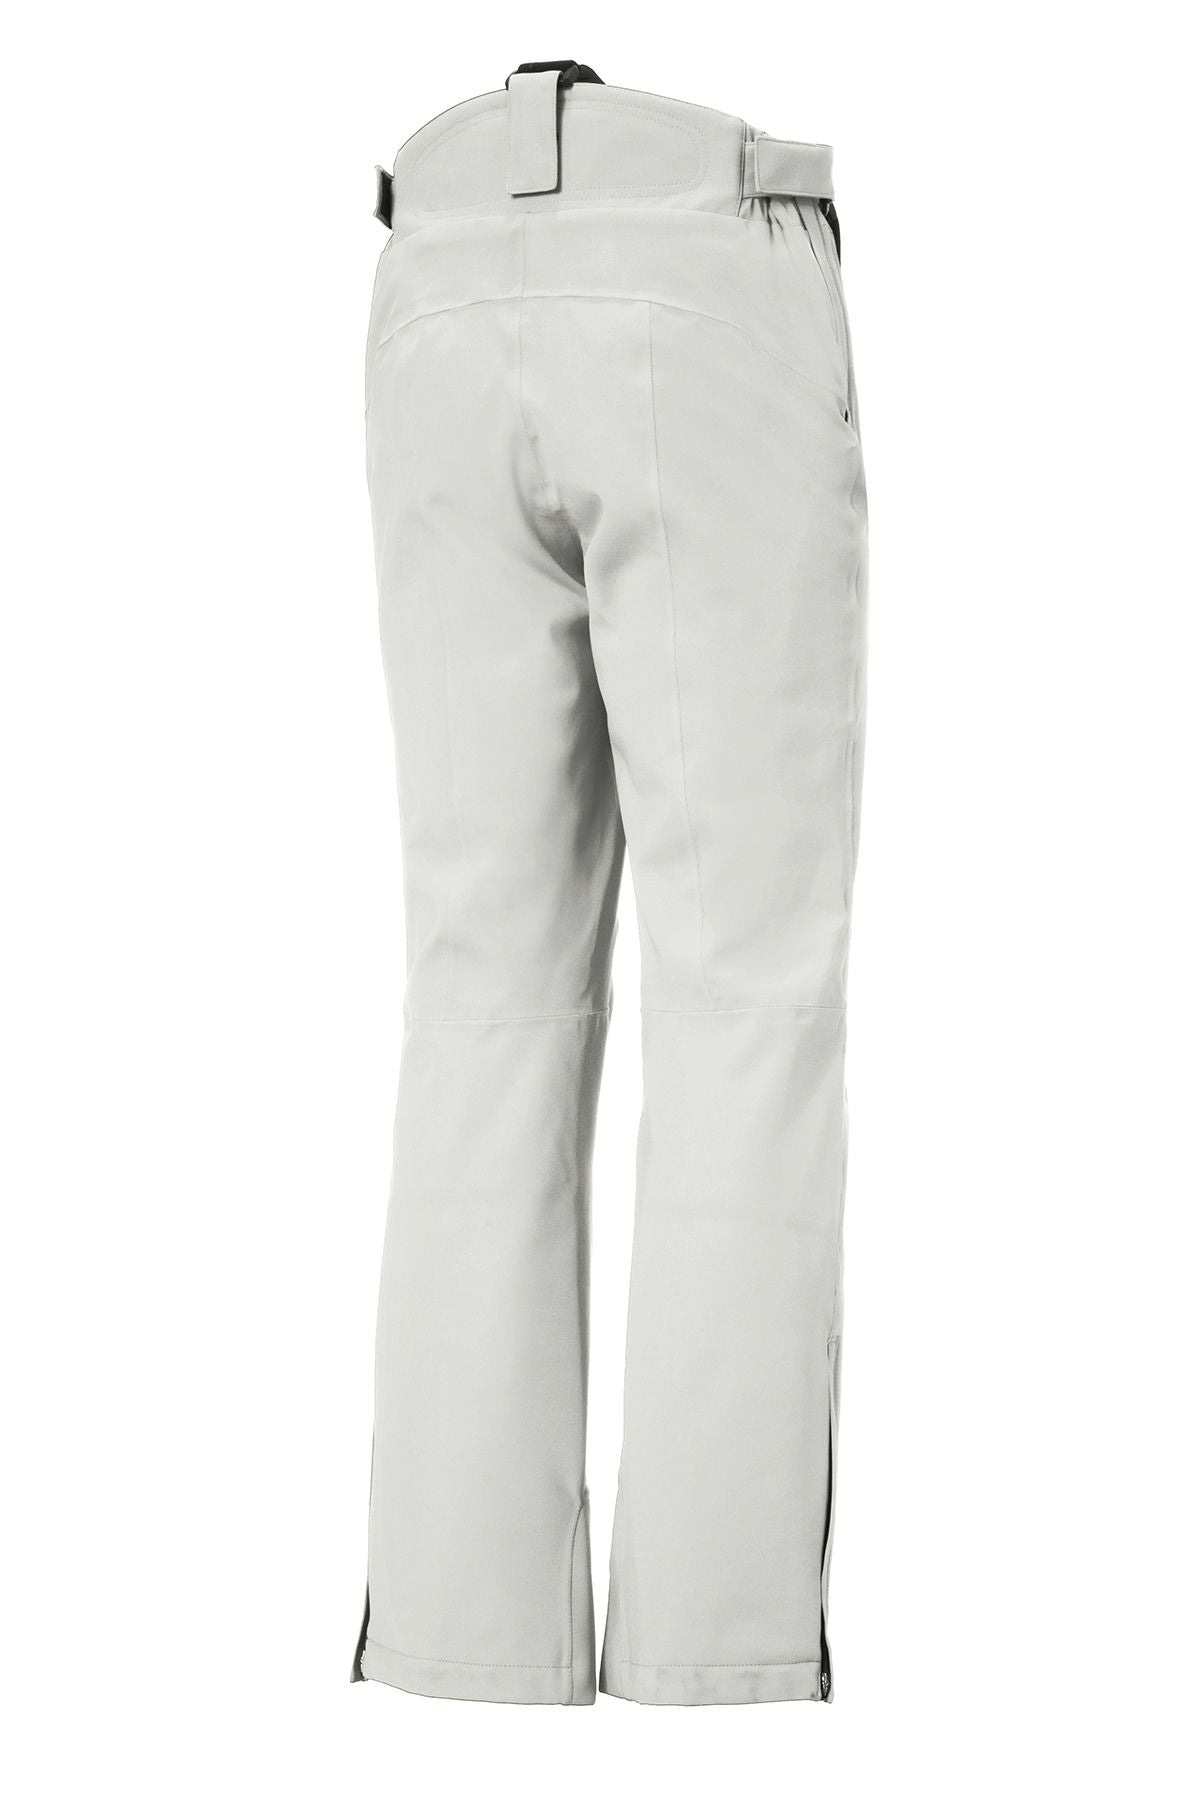 Rh+ Power Eco Pants - Pantaloni Sci Uomo - Neverland Firenze